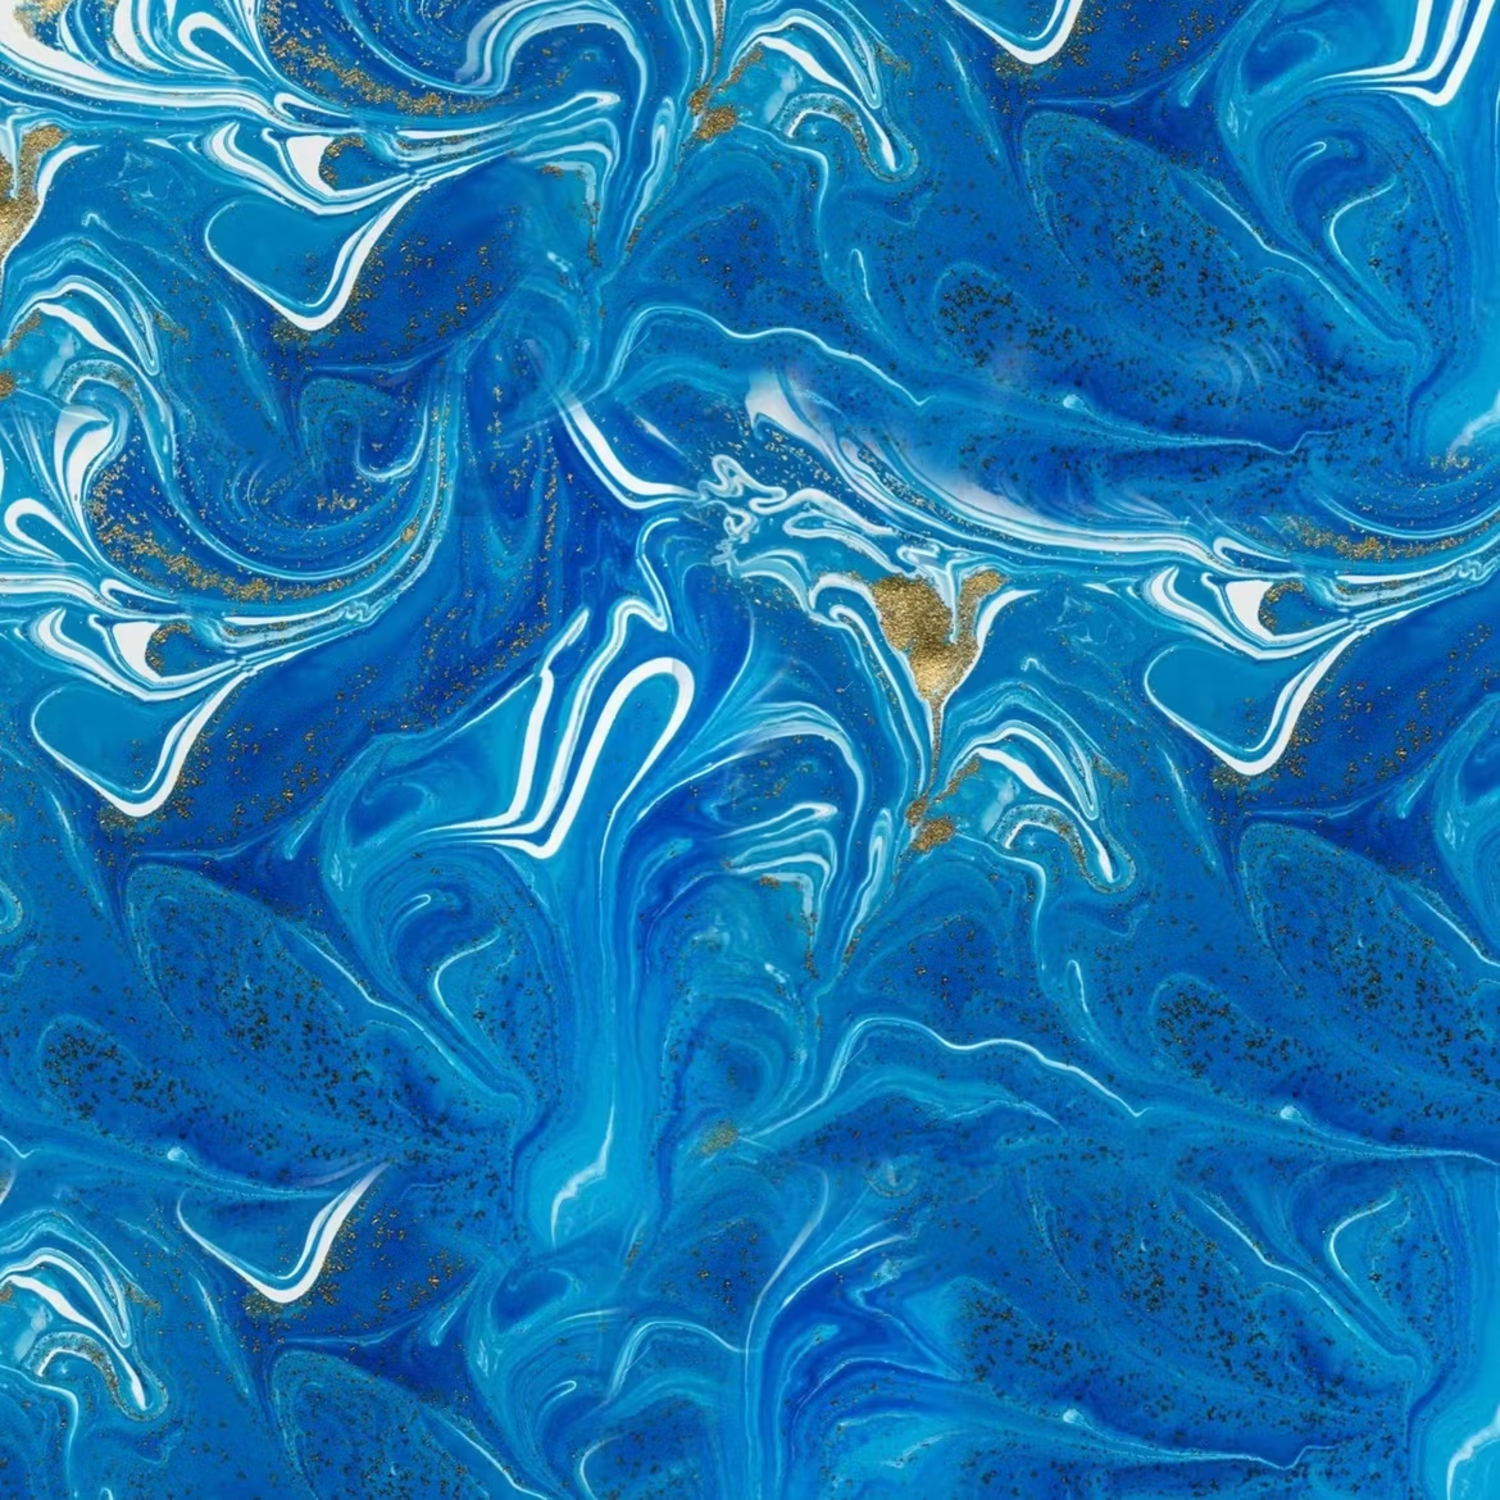 6085 高分辨率液体抽象背景纹理素材-Liquid Abstract Background